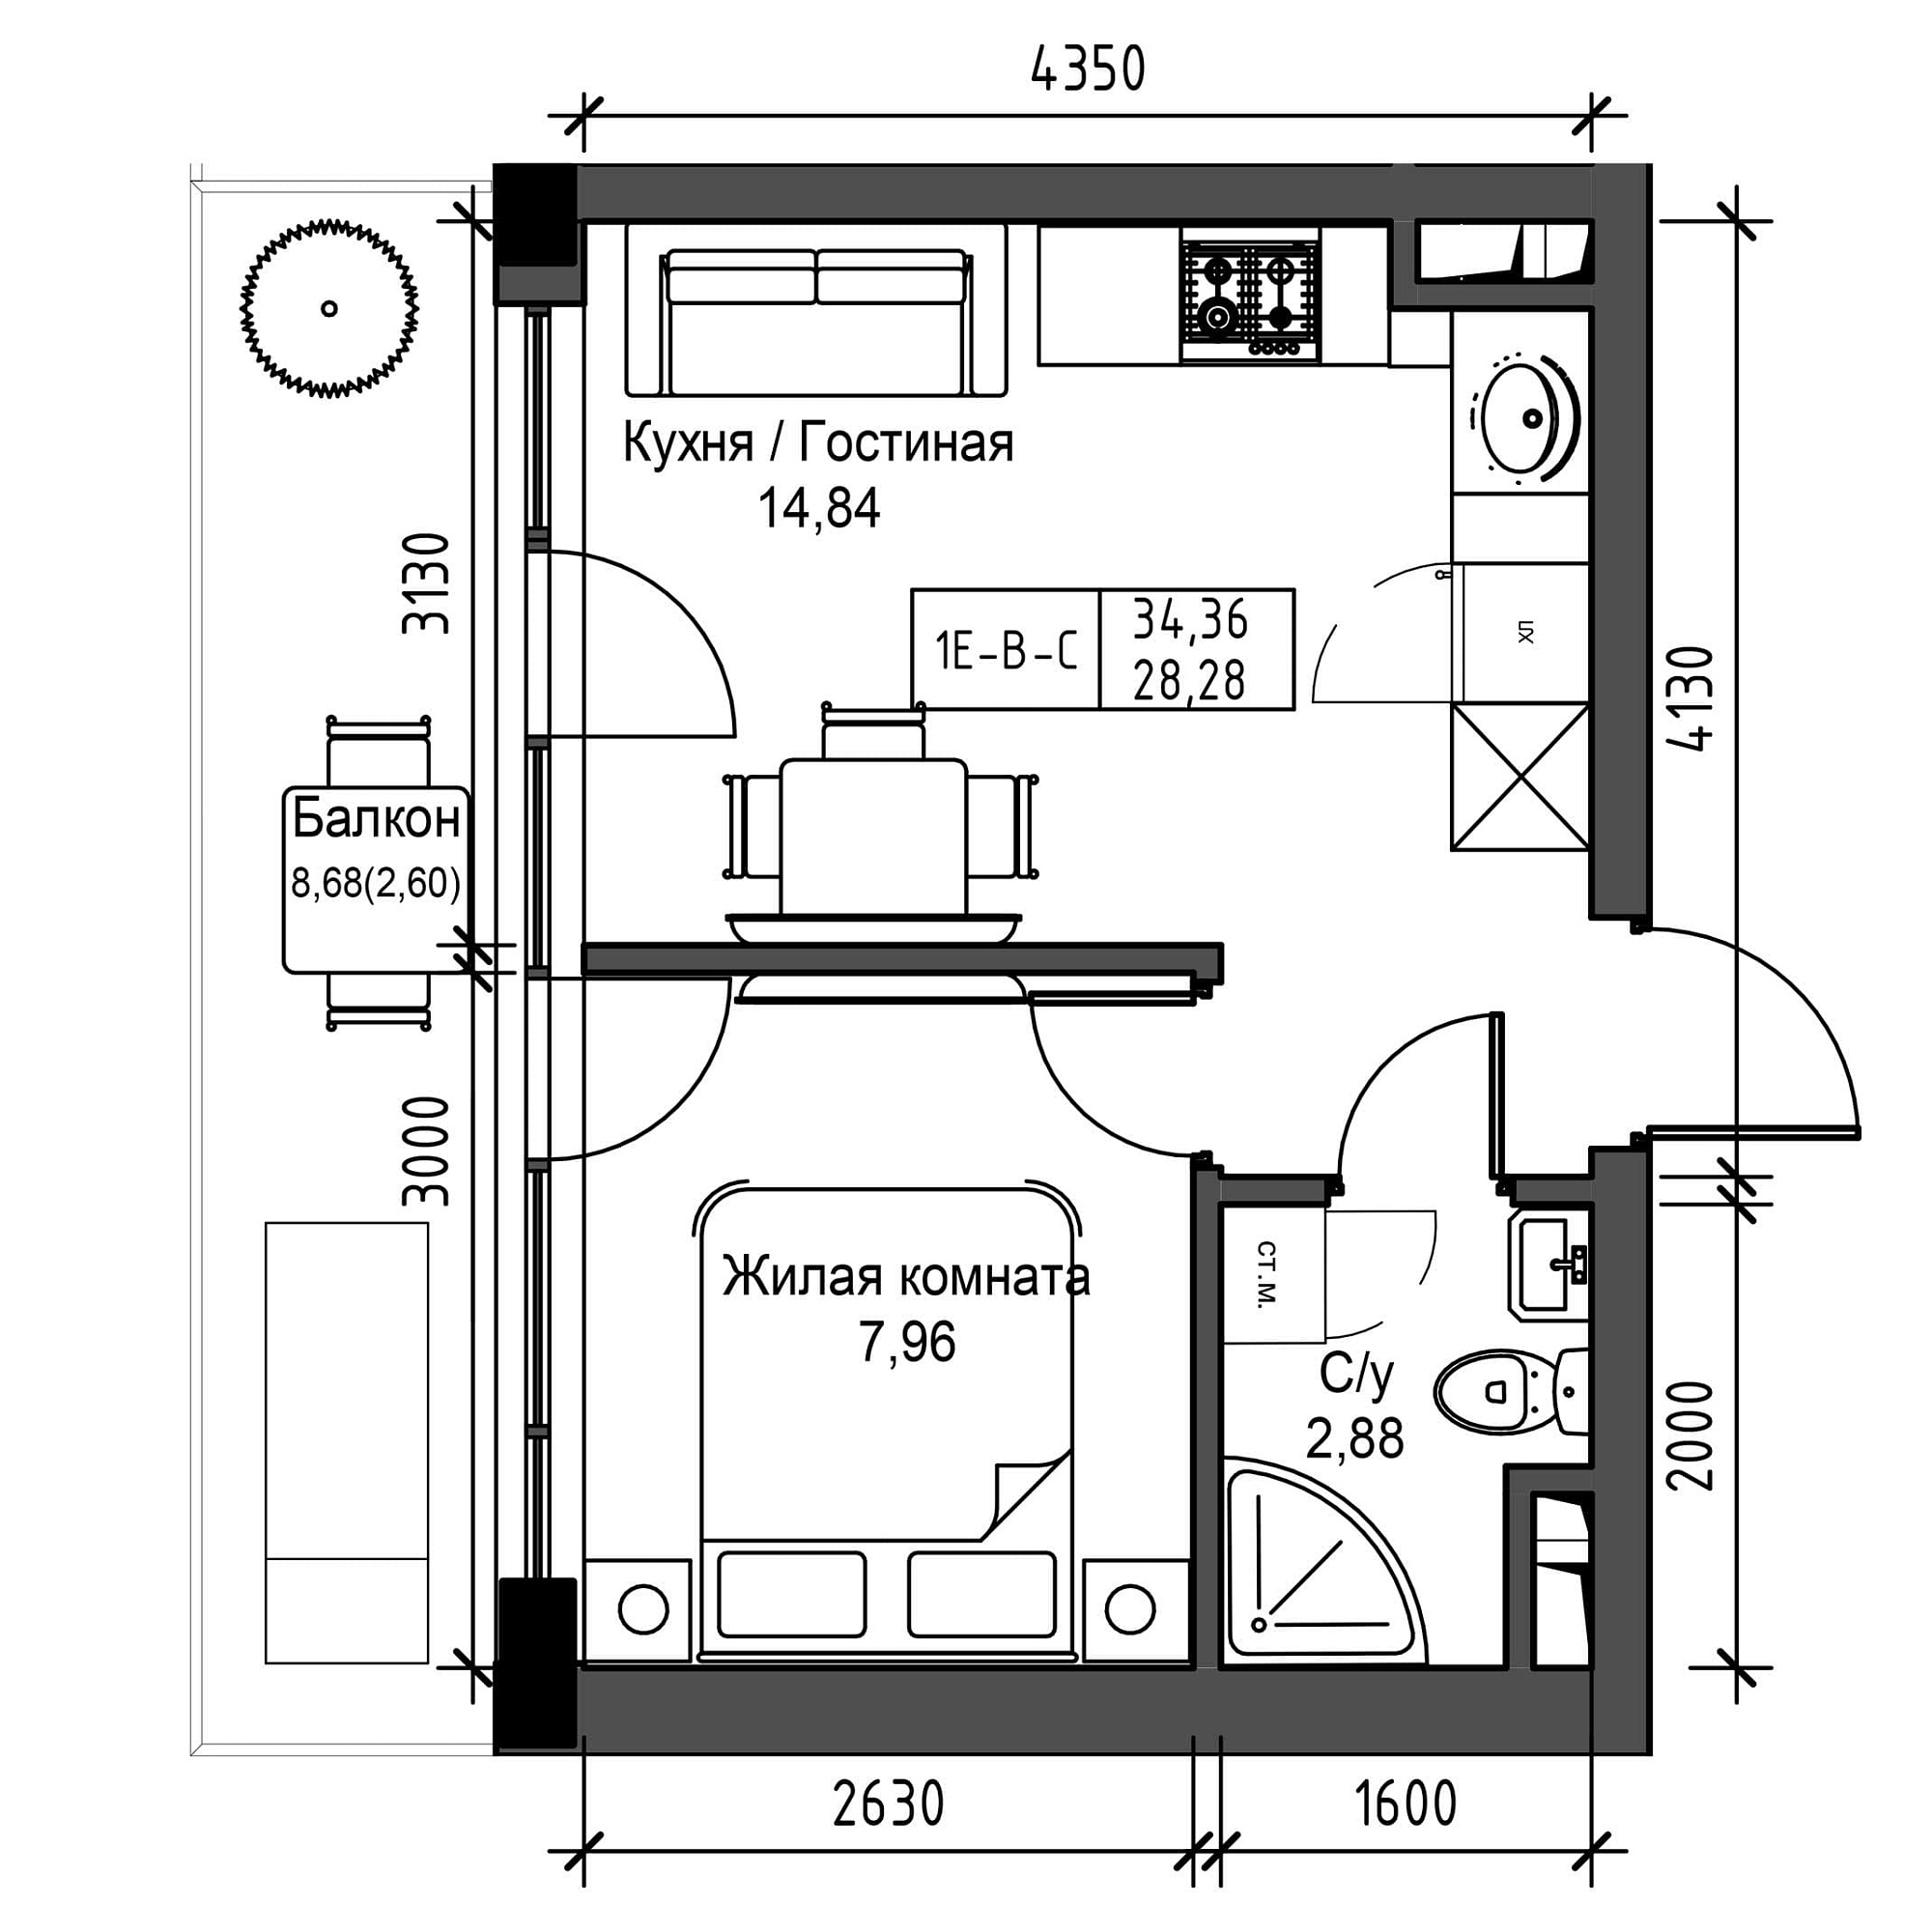 Планування 1-к квартира площею 28.28м2, UM-001-09/0014.